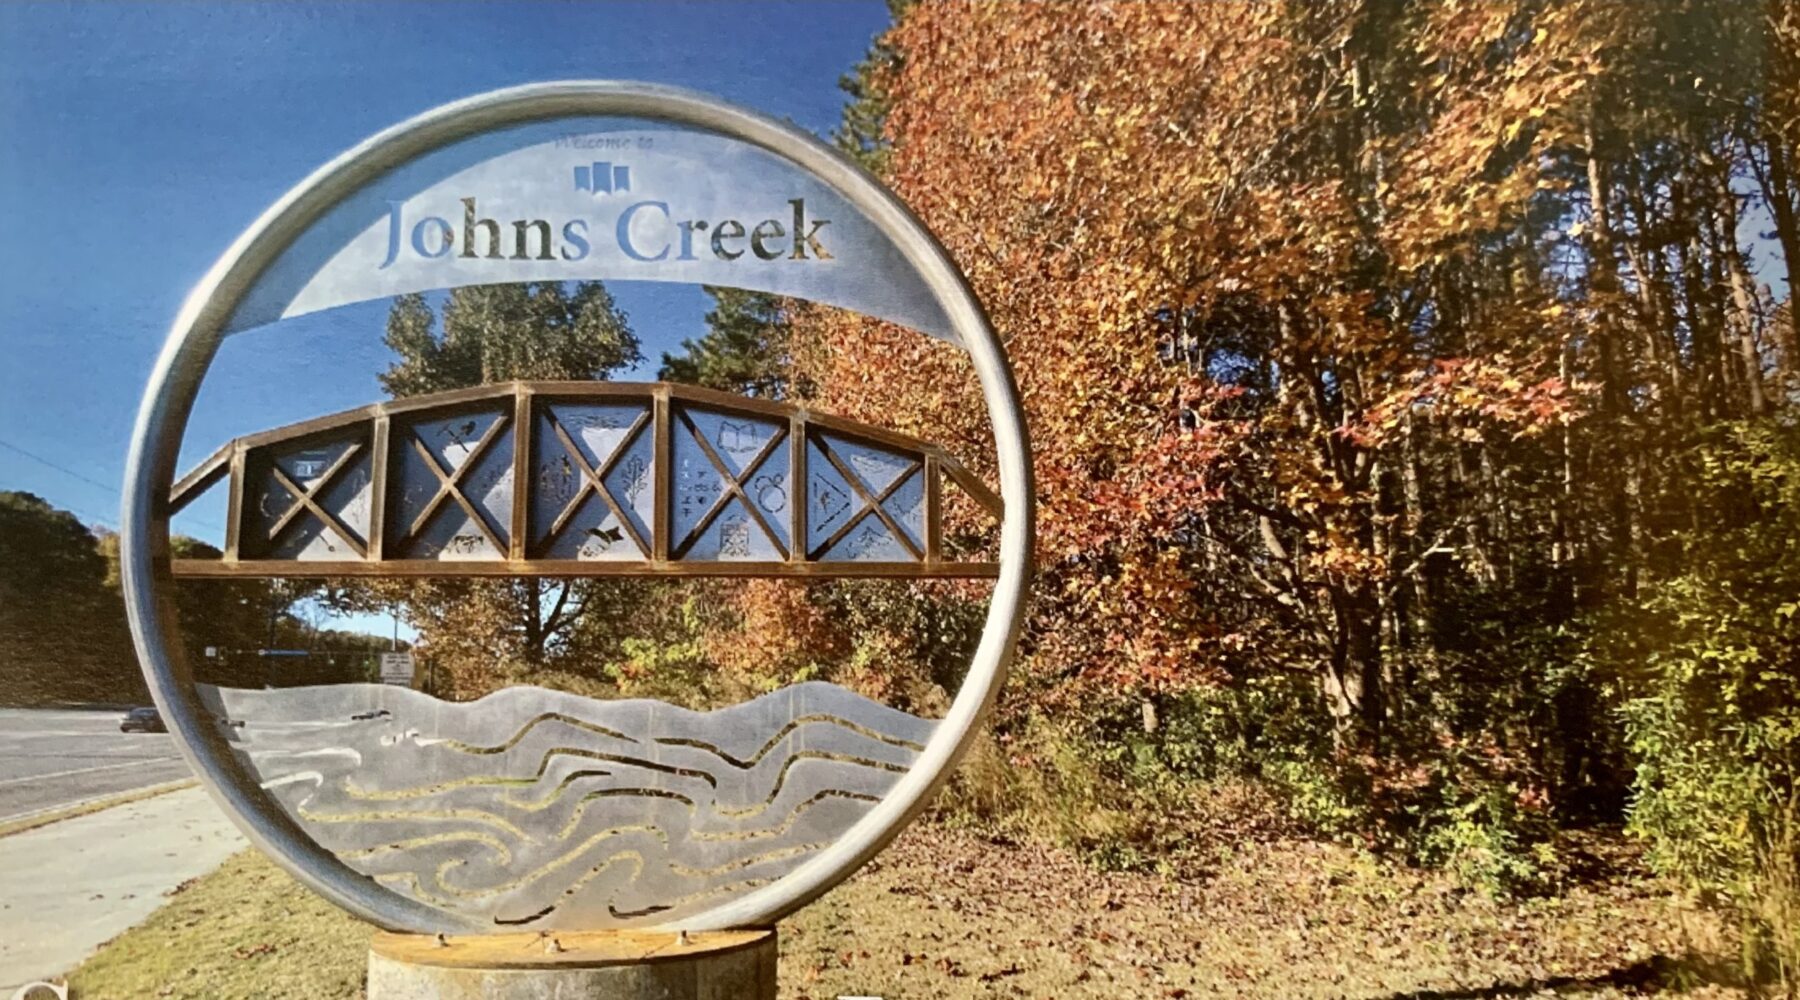 Johns creek ga opening sign